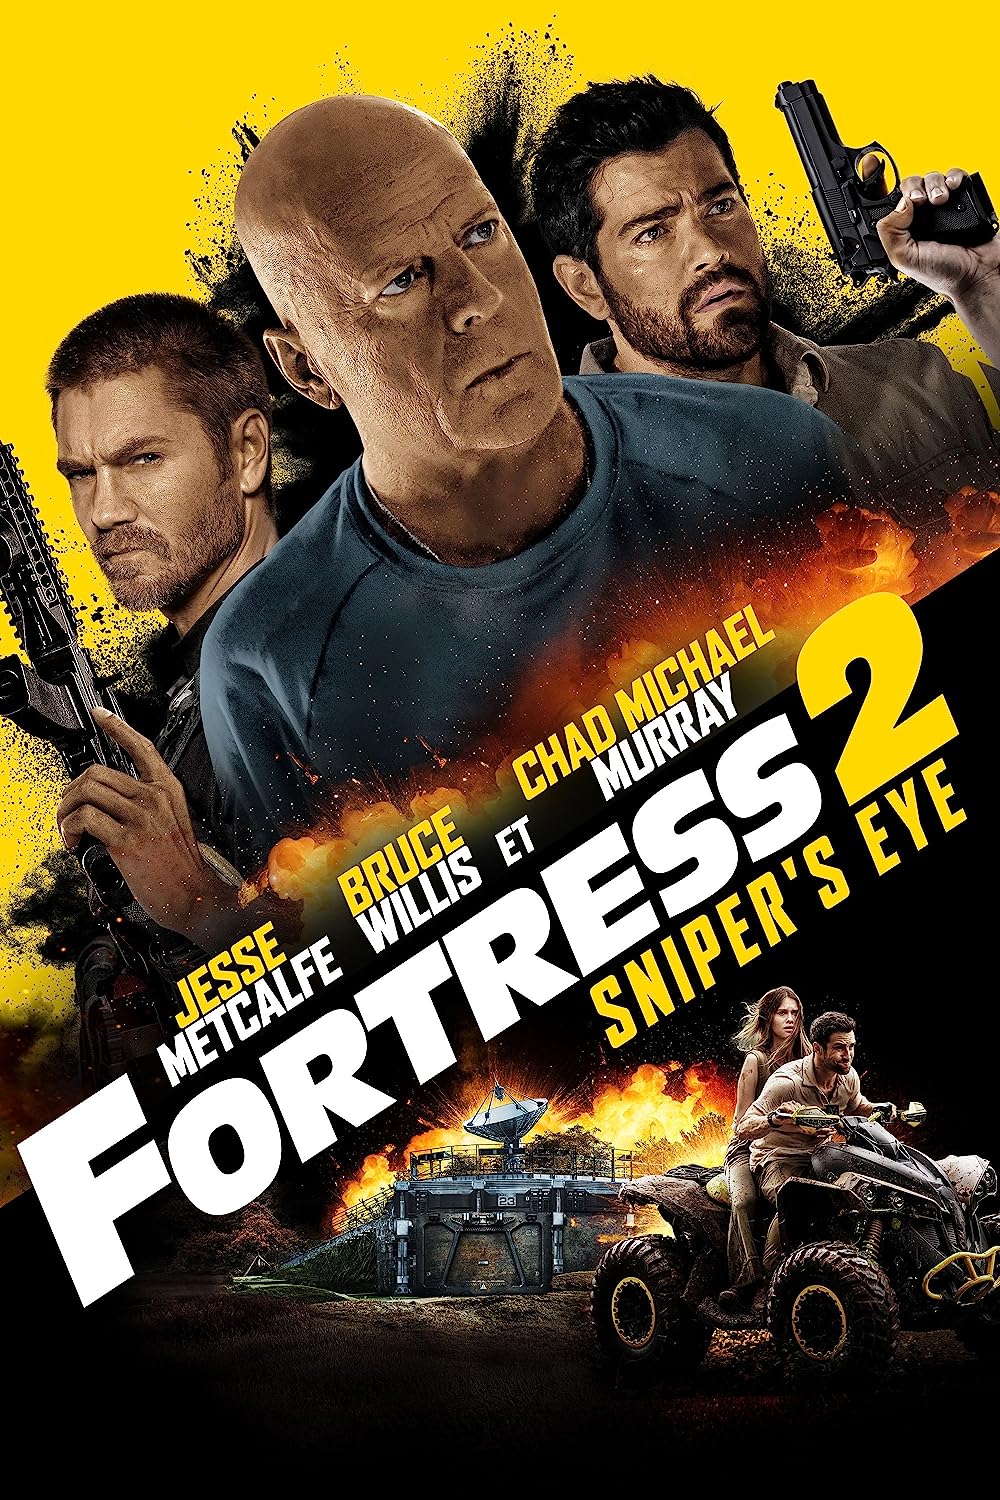 Fortress Snipers Eye 2022 Hindi ORG Dual Audio 1080p-720p-480p HDRip ESub Download